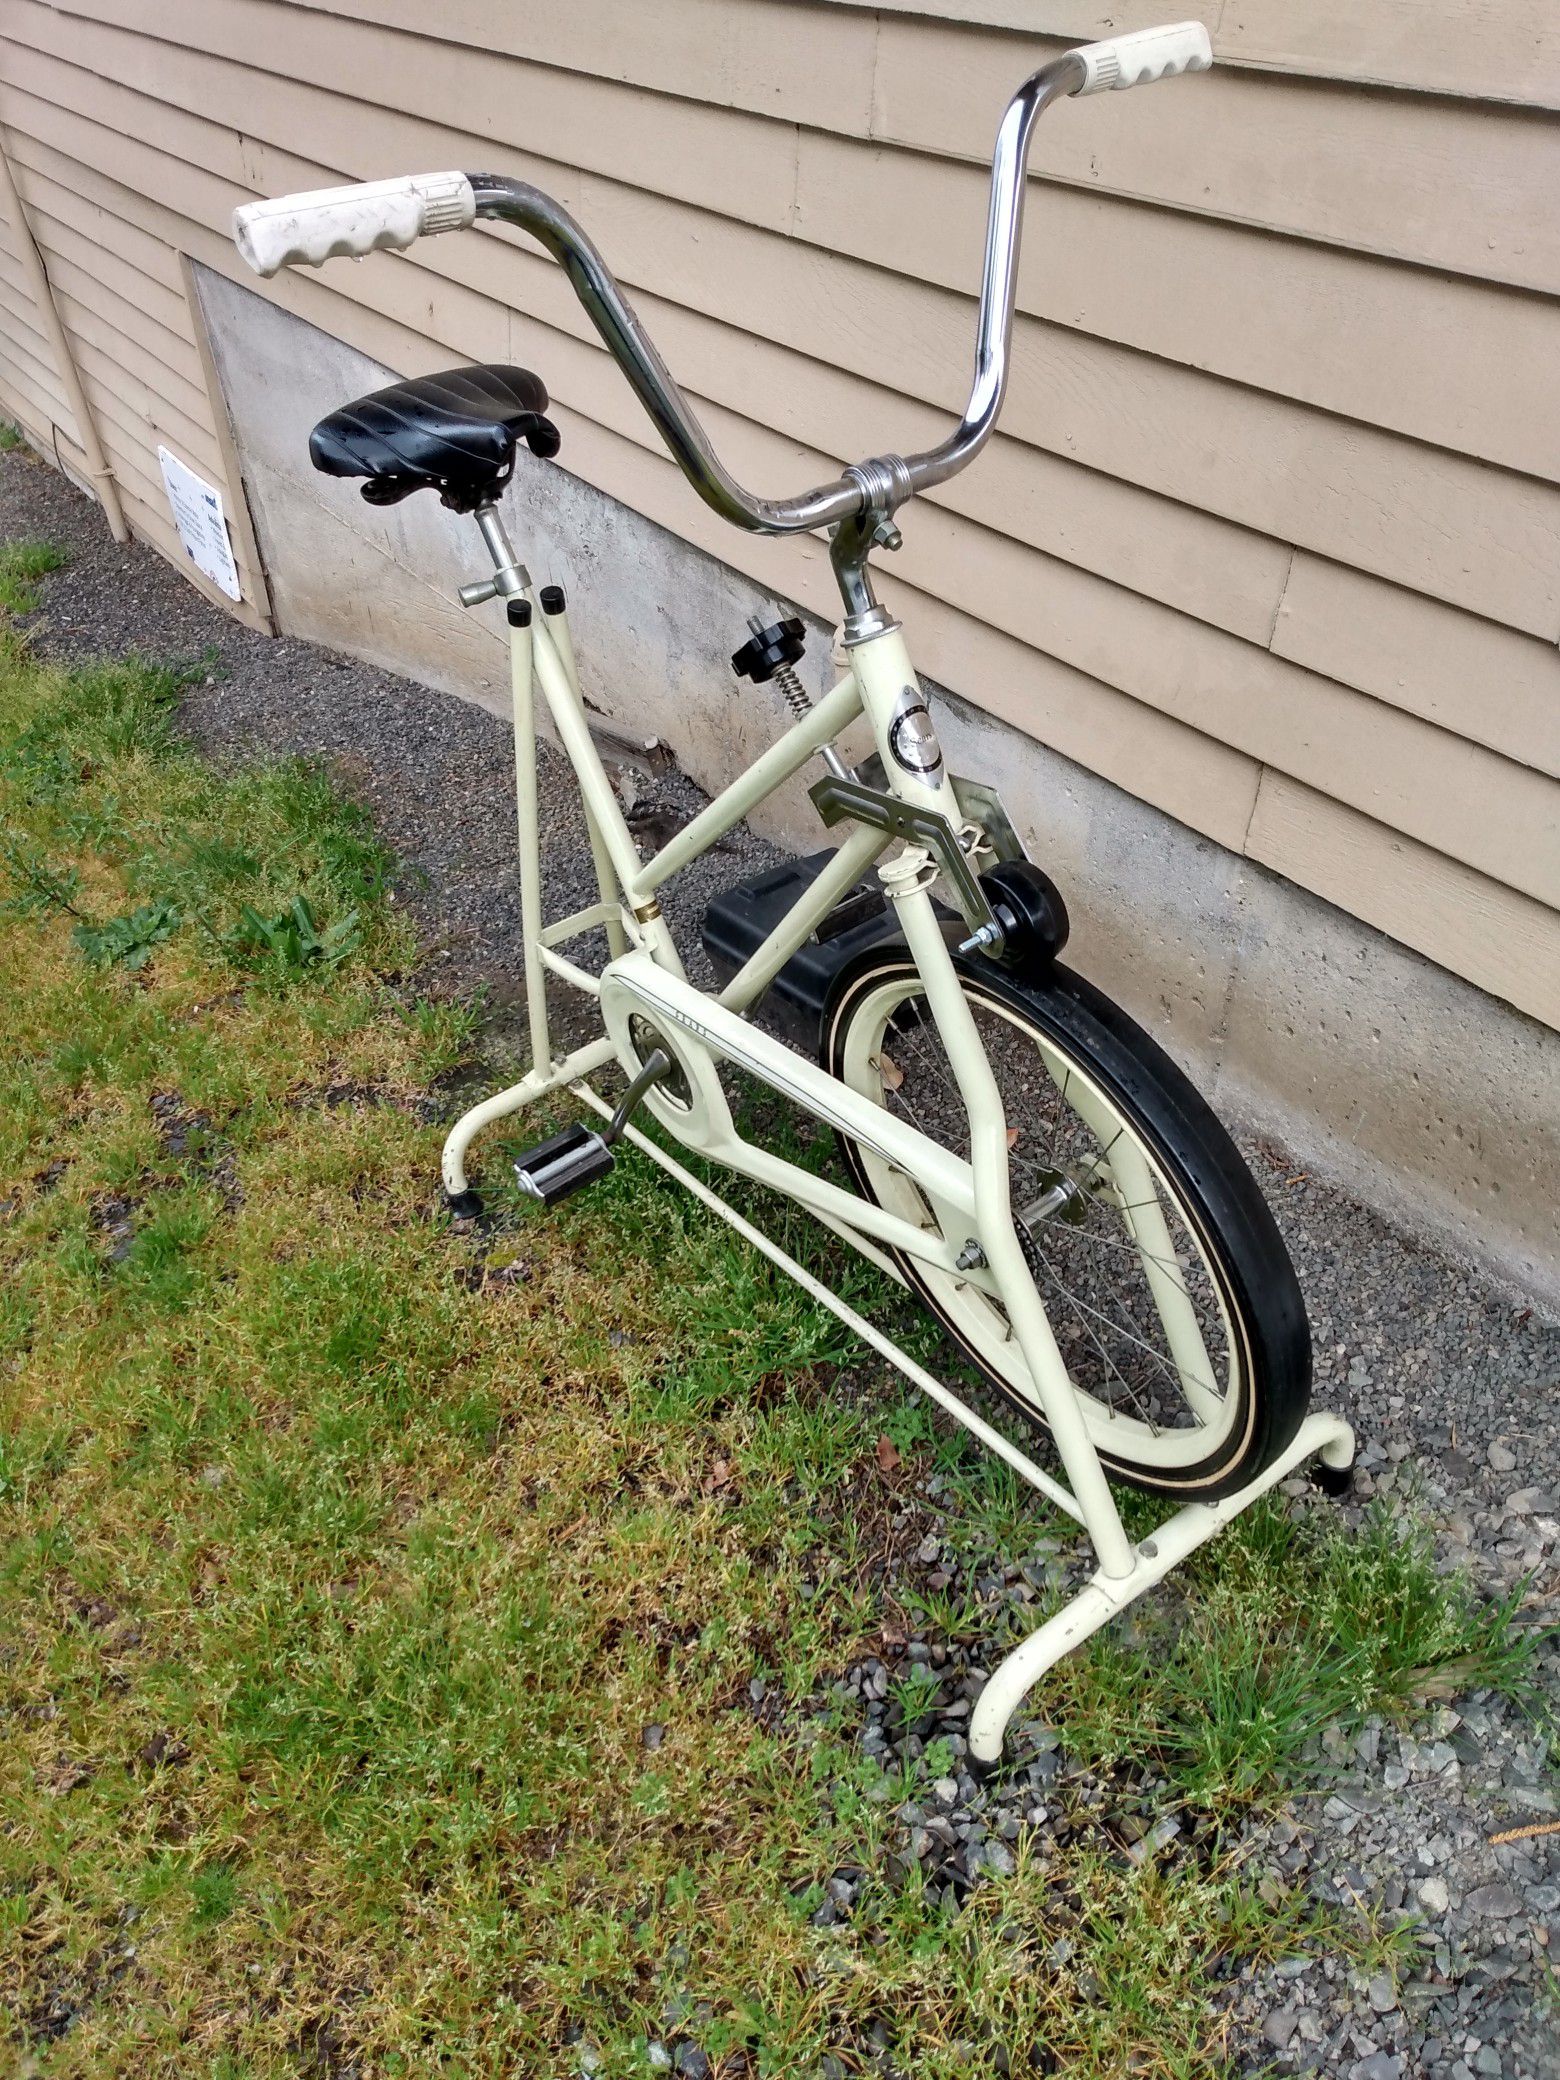 Sears vintage stationary exercise bike